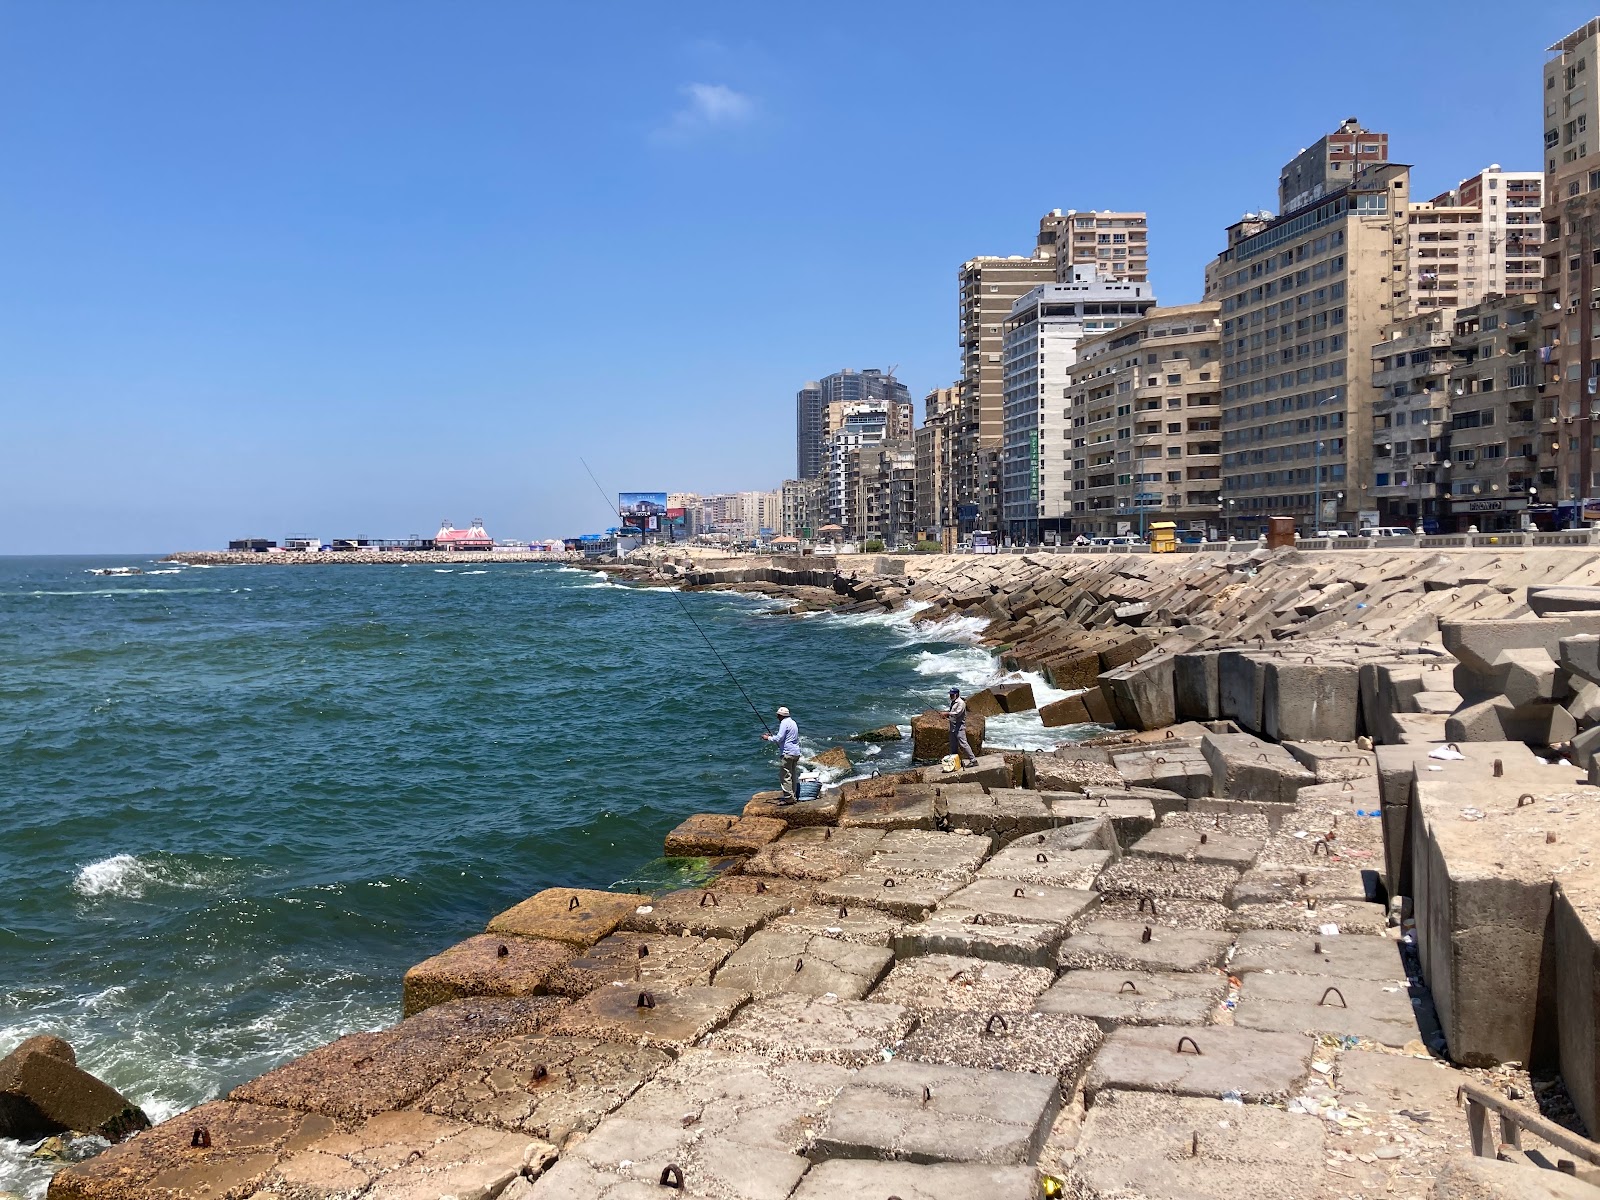 Foto de Alexandria Corniche con muy limpio nivel de limpieza